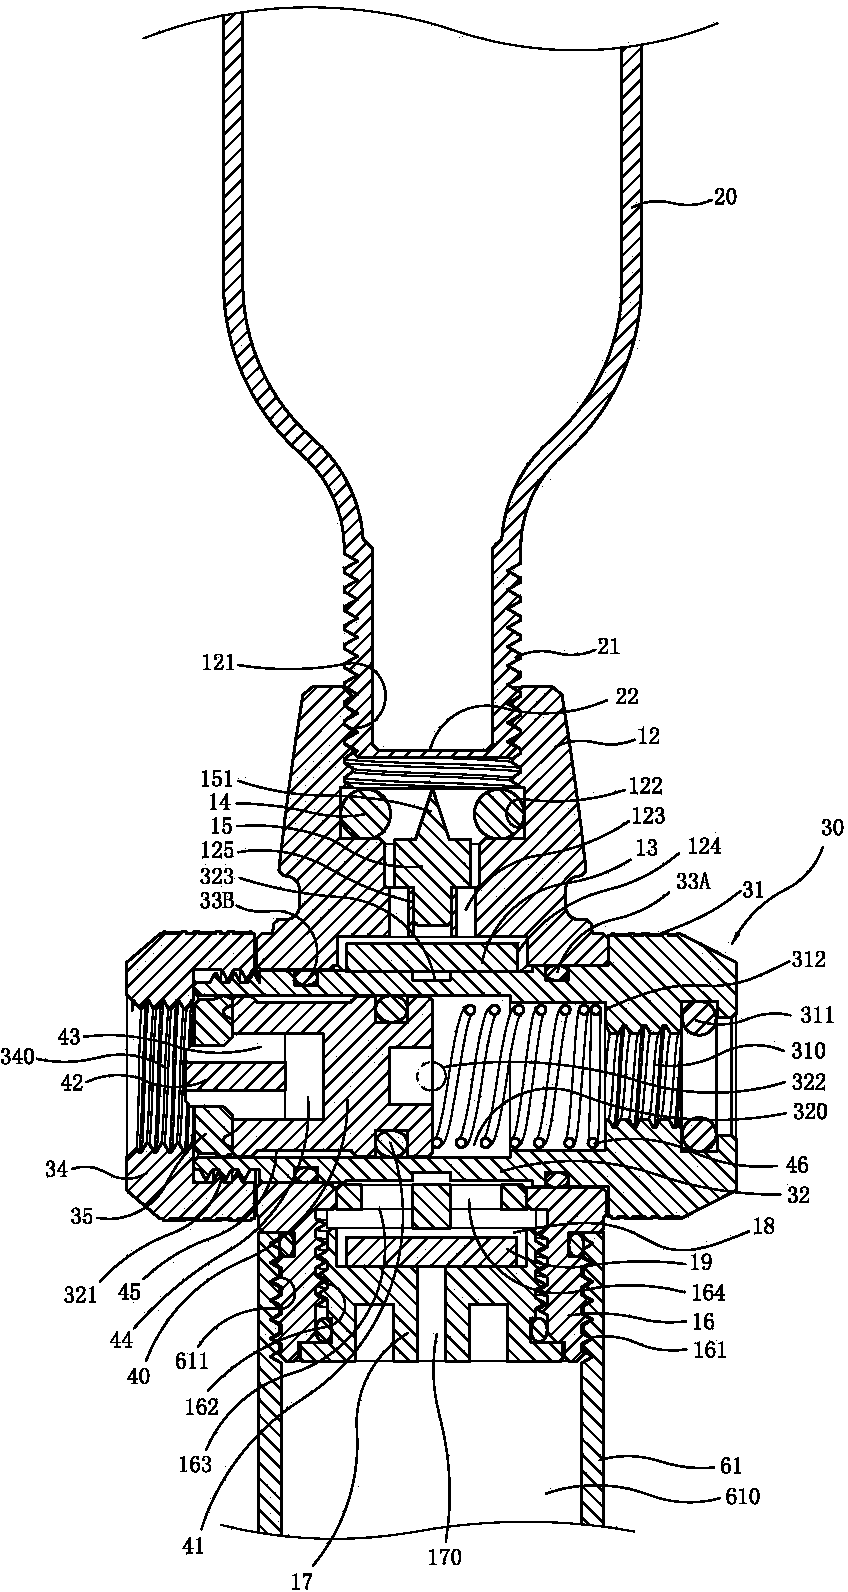 Schrader valve and Presta valve dual-purpose tuyere head